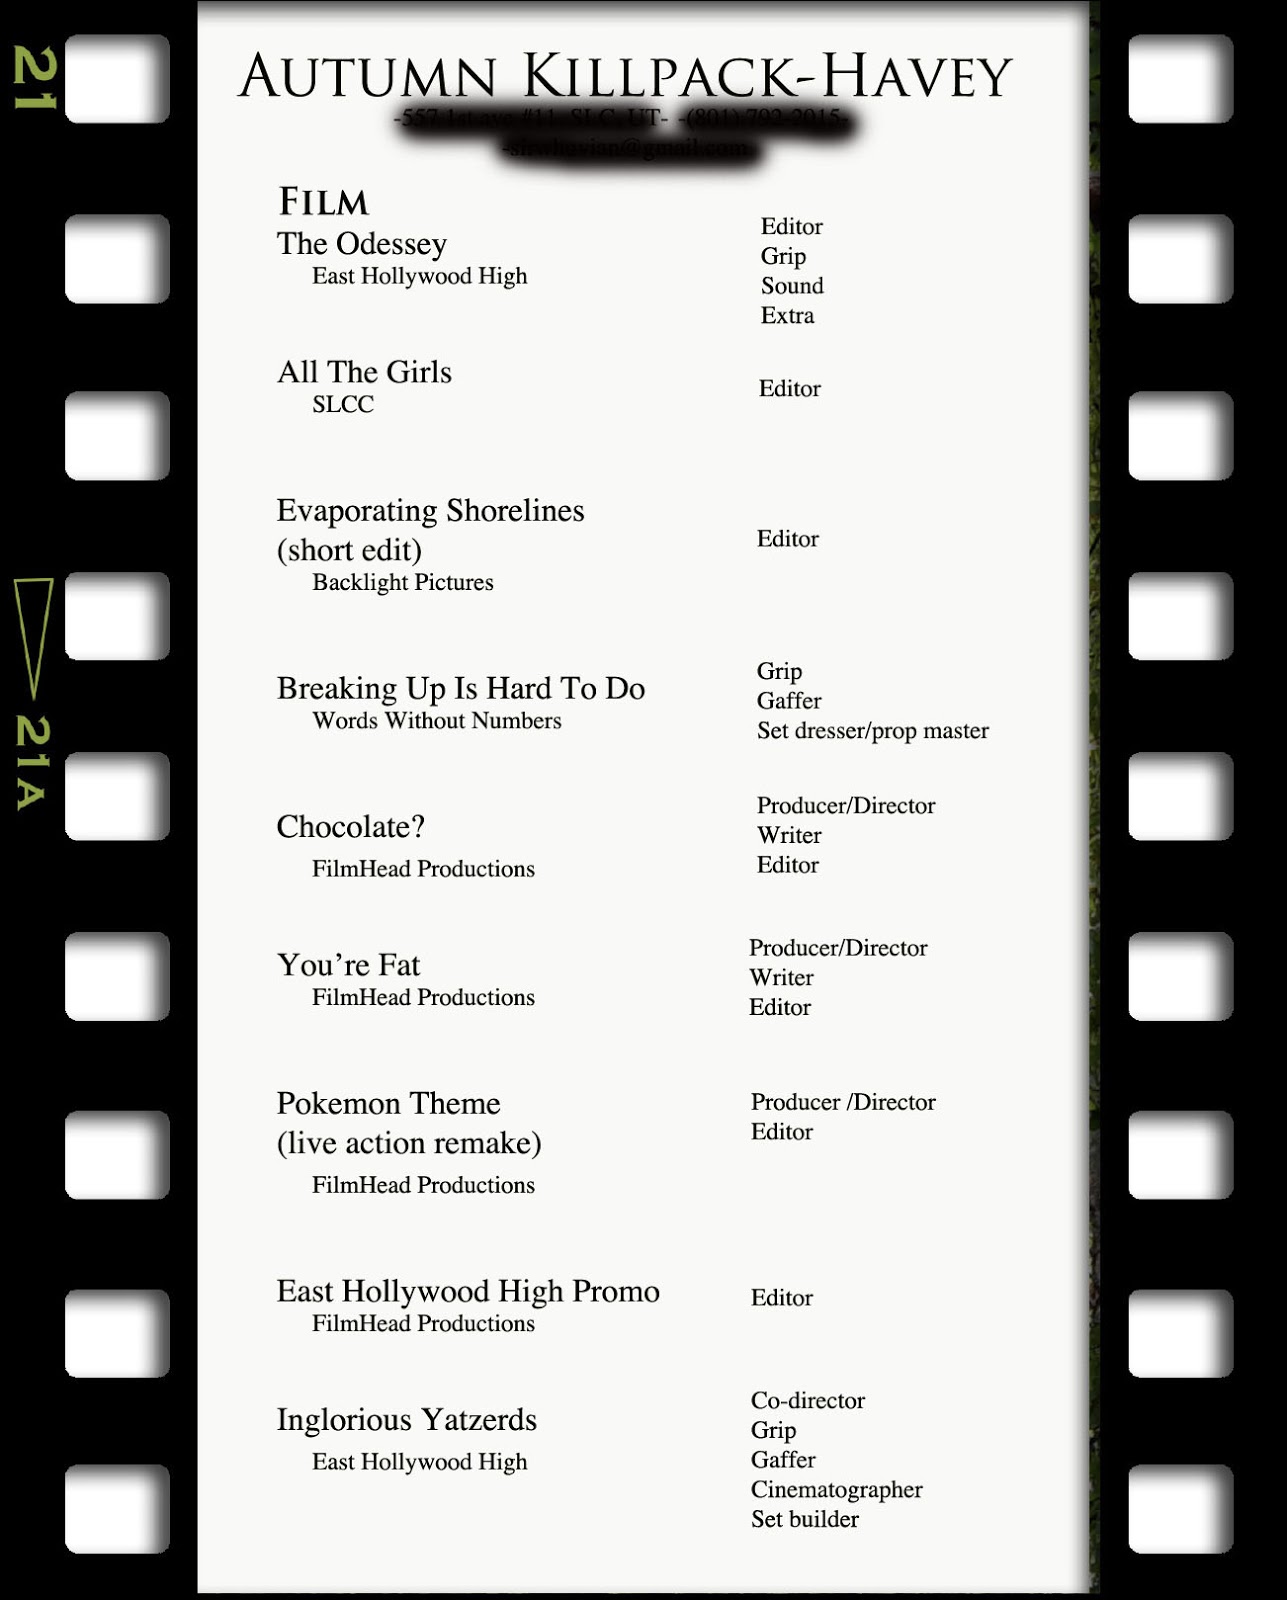 Video resume example